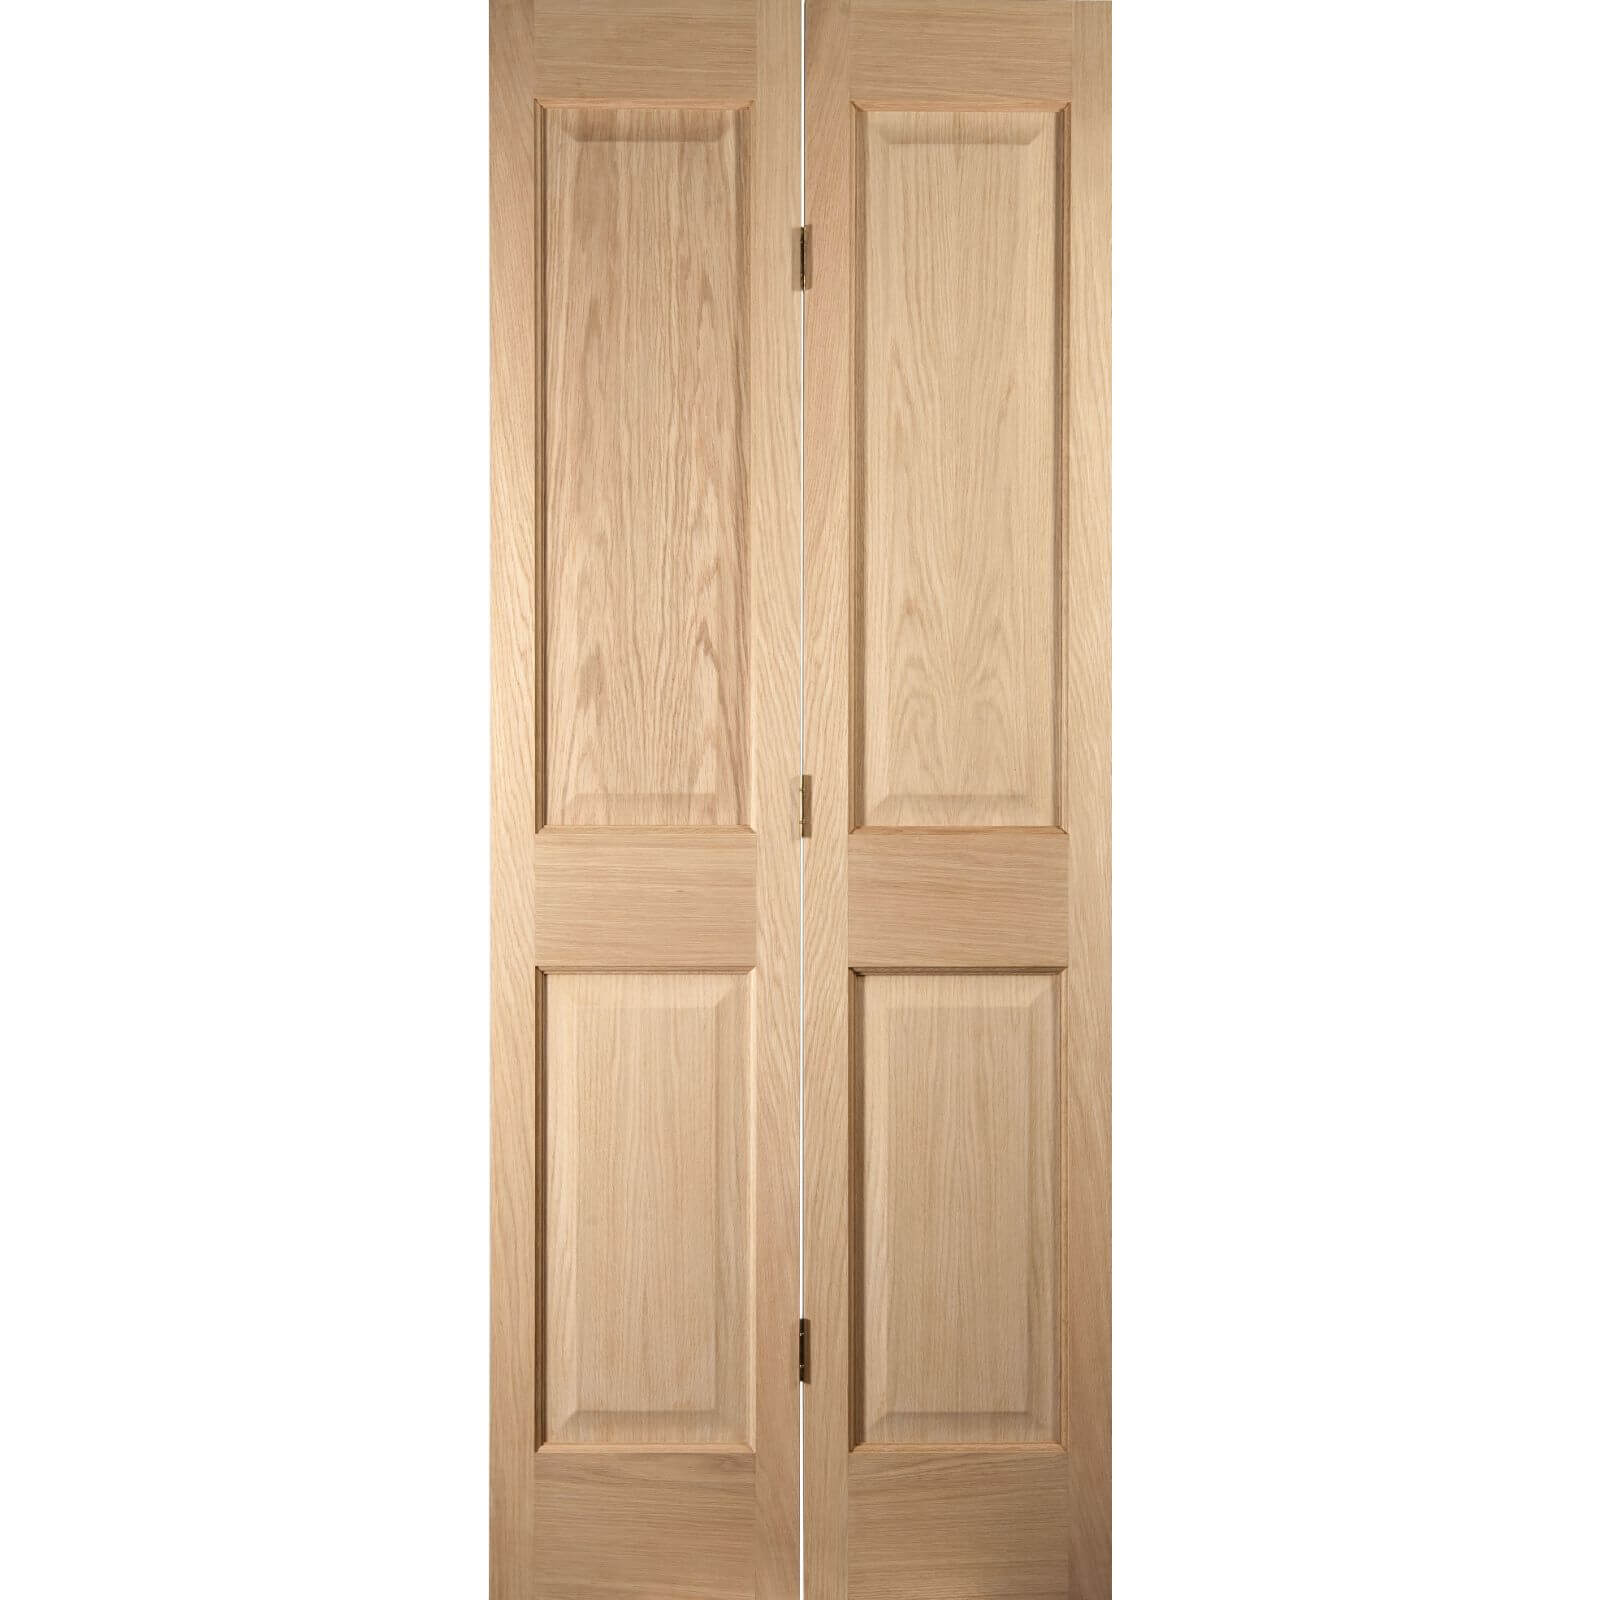 4 Panel White Oak Veneer Internal Bi-Fold Door - 762mm Wide